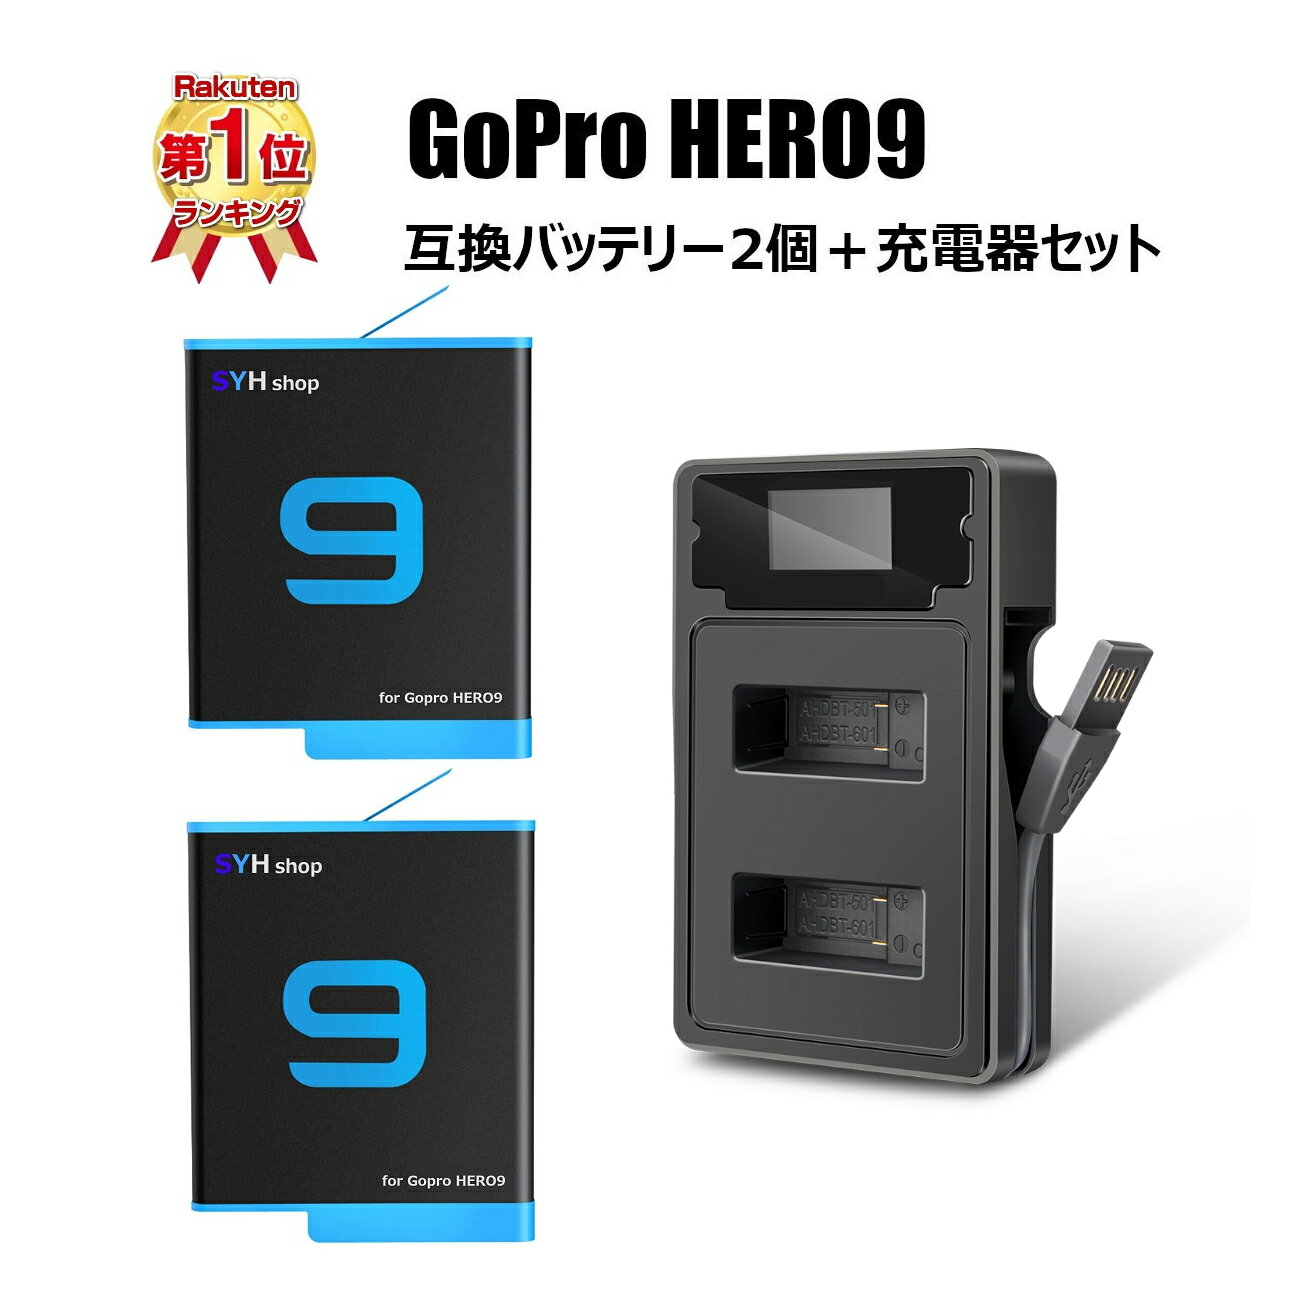  11 2o 9HیtBv[g GoPro HERO9 black p SYH SHOPIWi݊obe[2 یP[X {USBfAobe[[d@GoPro HERO9 ANZT[ S-13